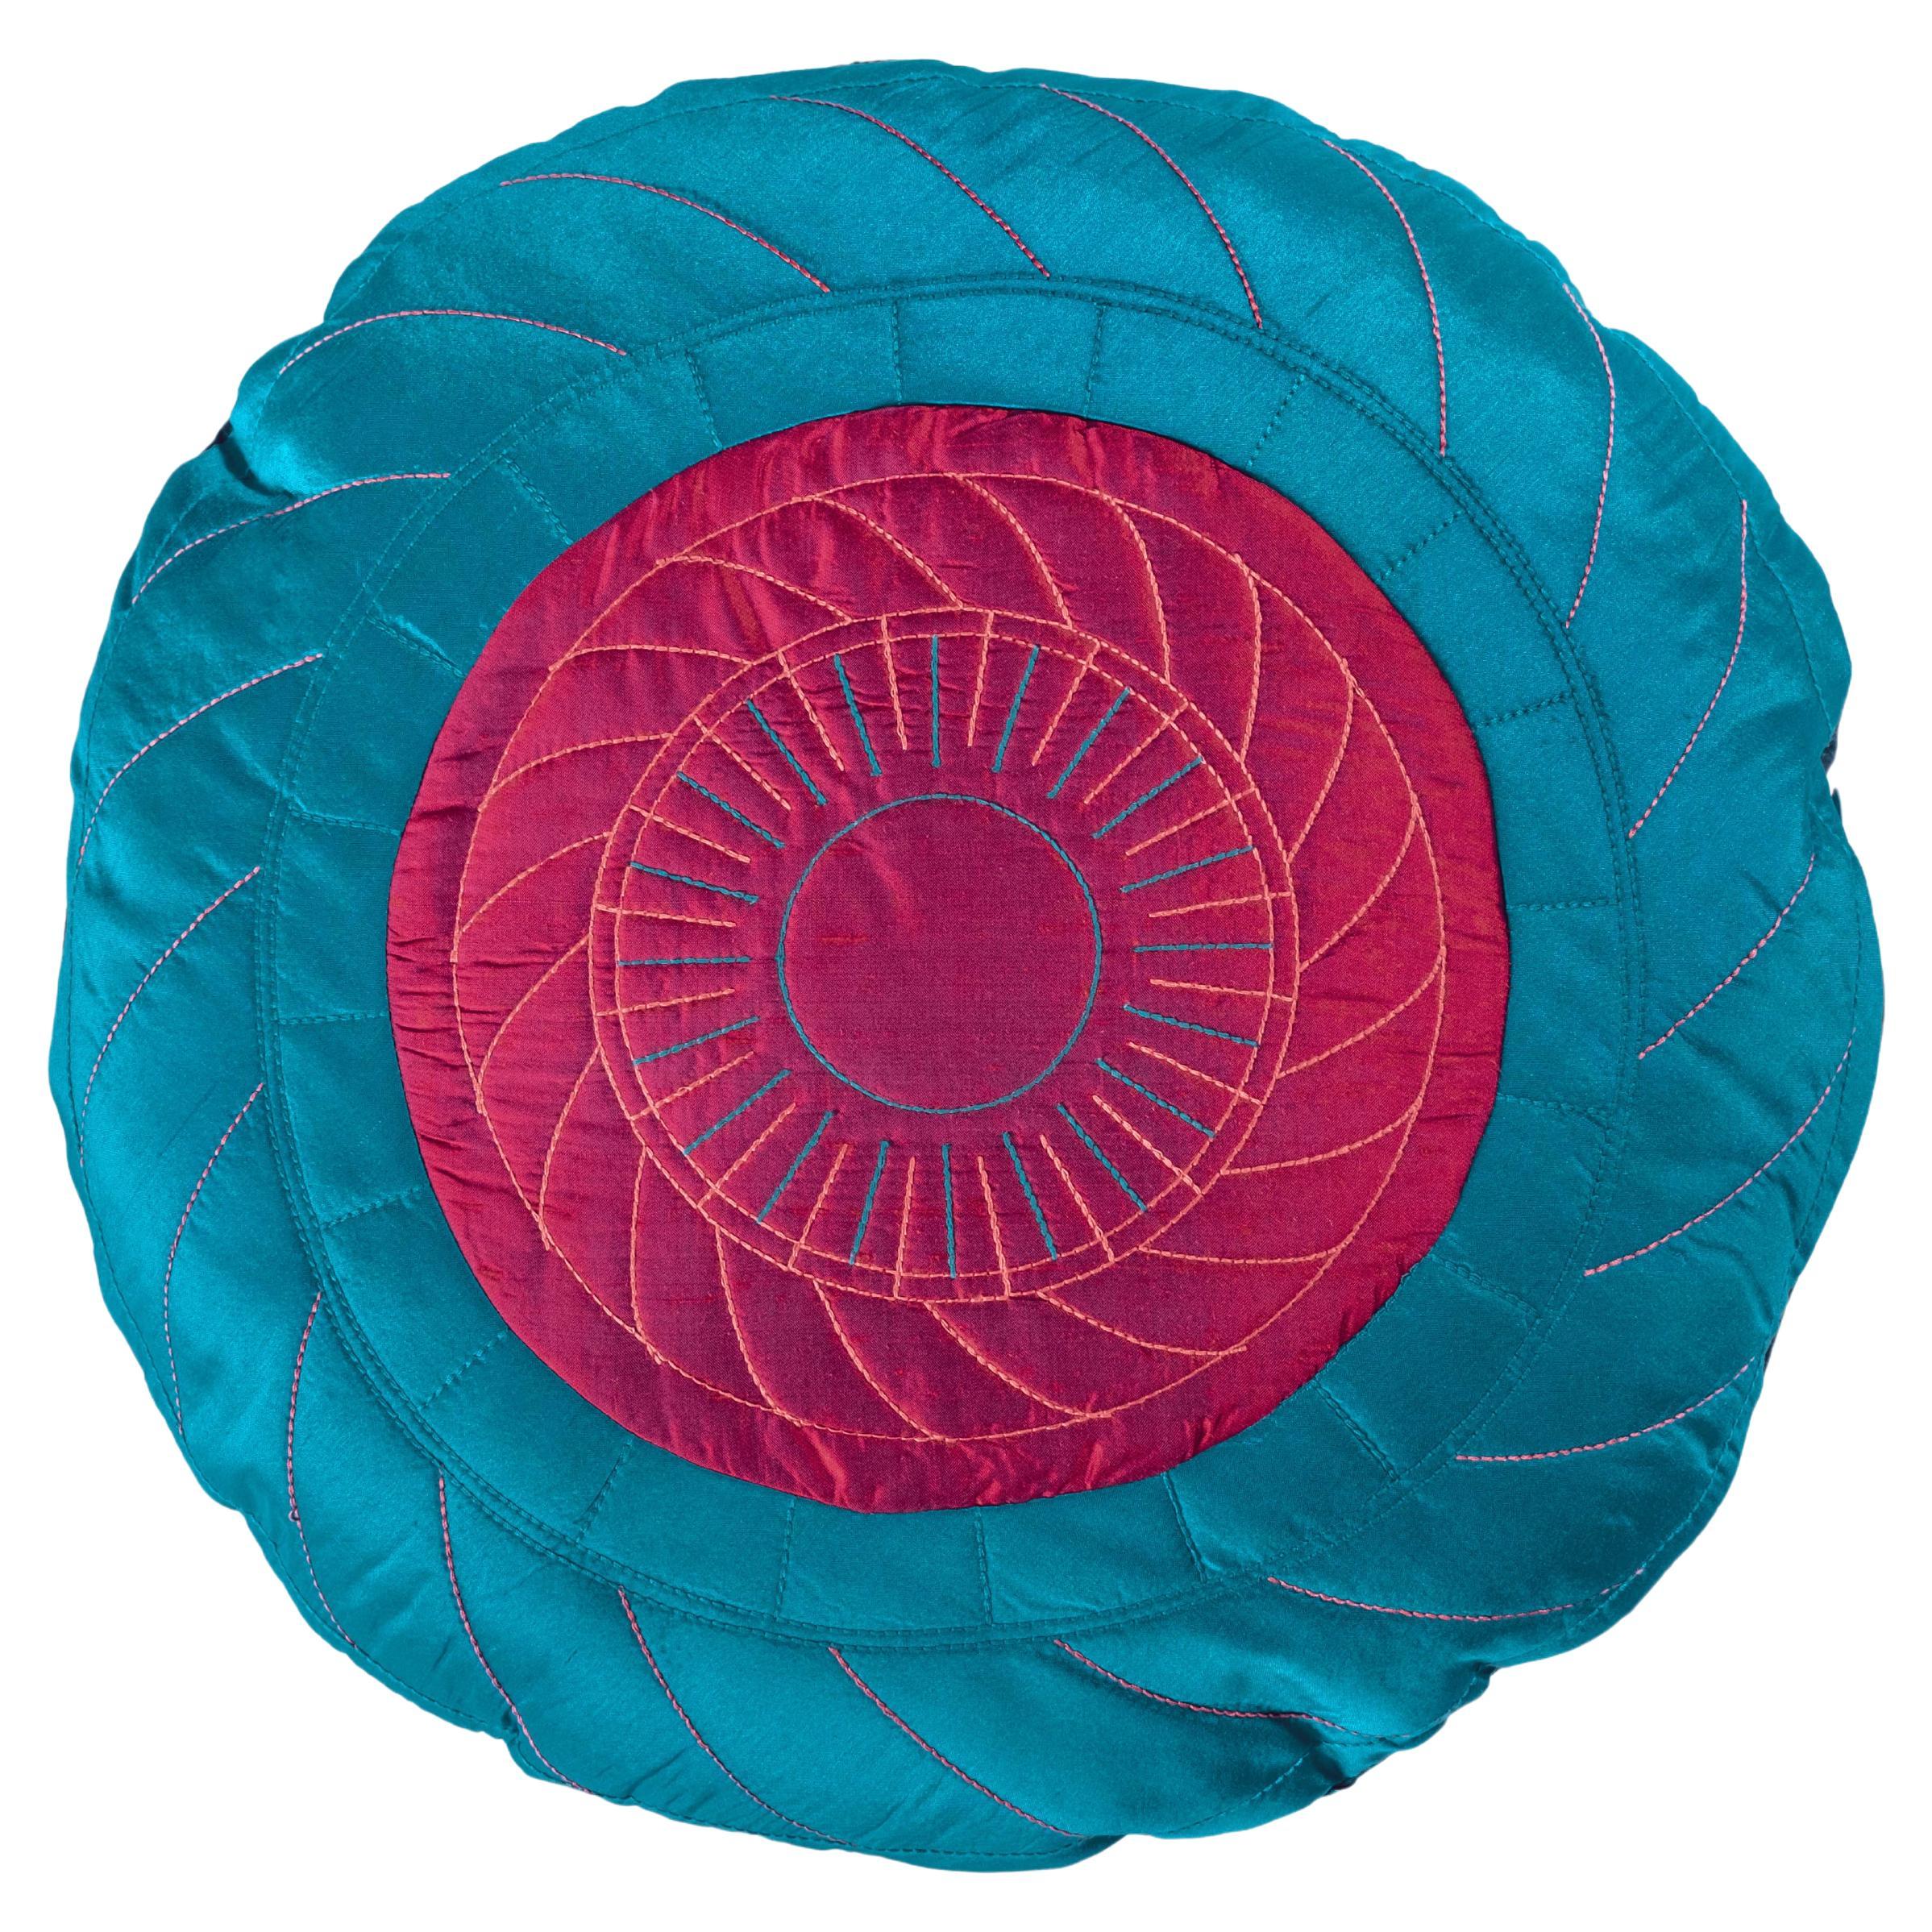 SWIRL BluePurple / NavyBlueYellow by Bethan Laura Wood, Handcrafted Silk Cushion For Sale